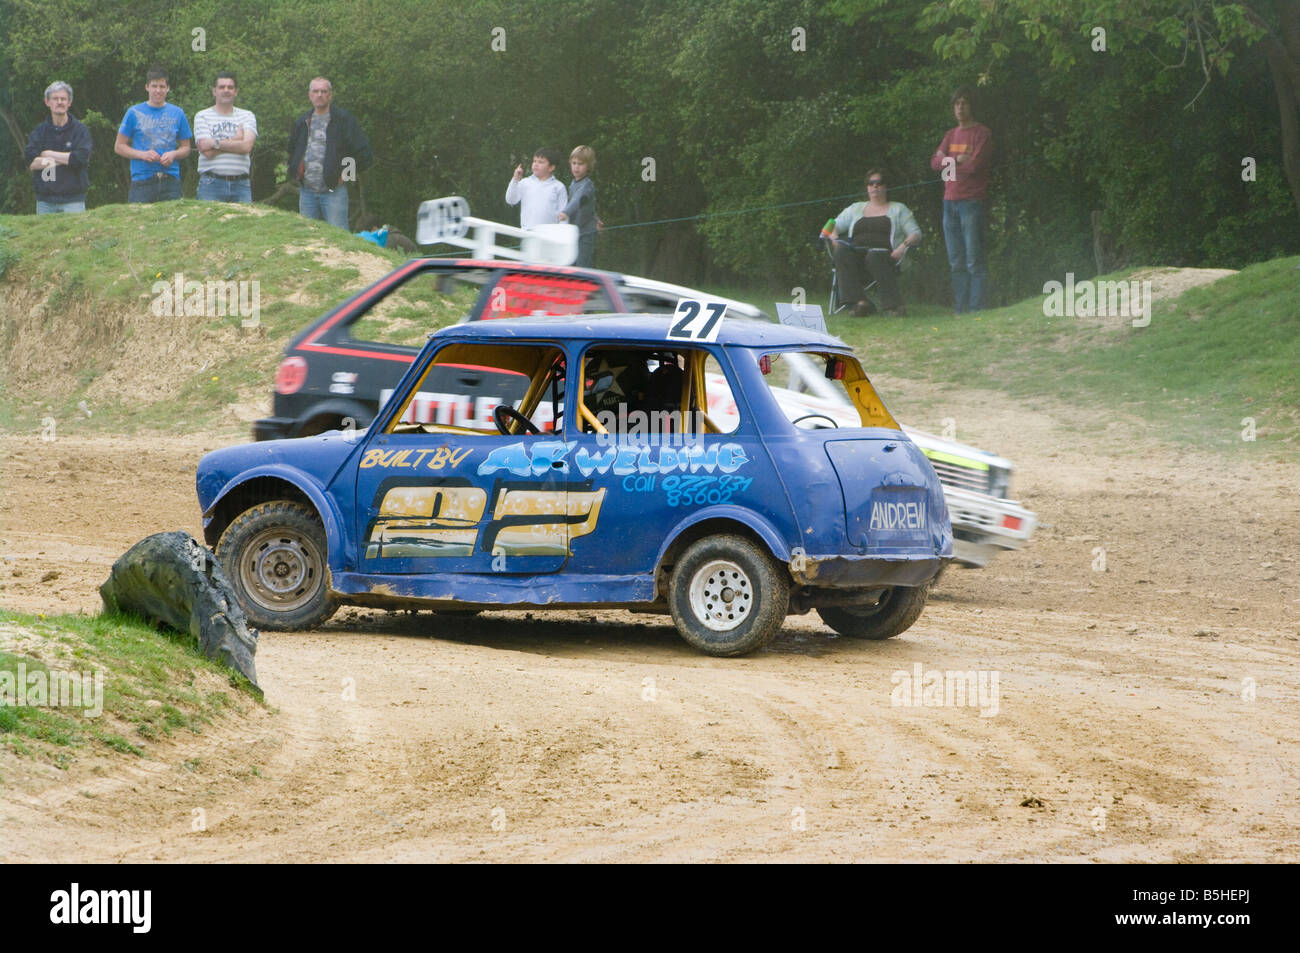 Banger Racing Mini Stock Cars Race Smallfield Raceway Surrey Stock Photo: 20668442 - Alamy1300 x 953